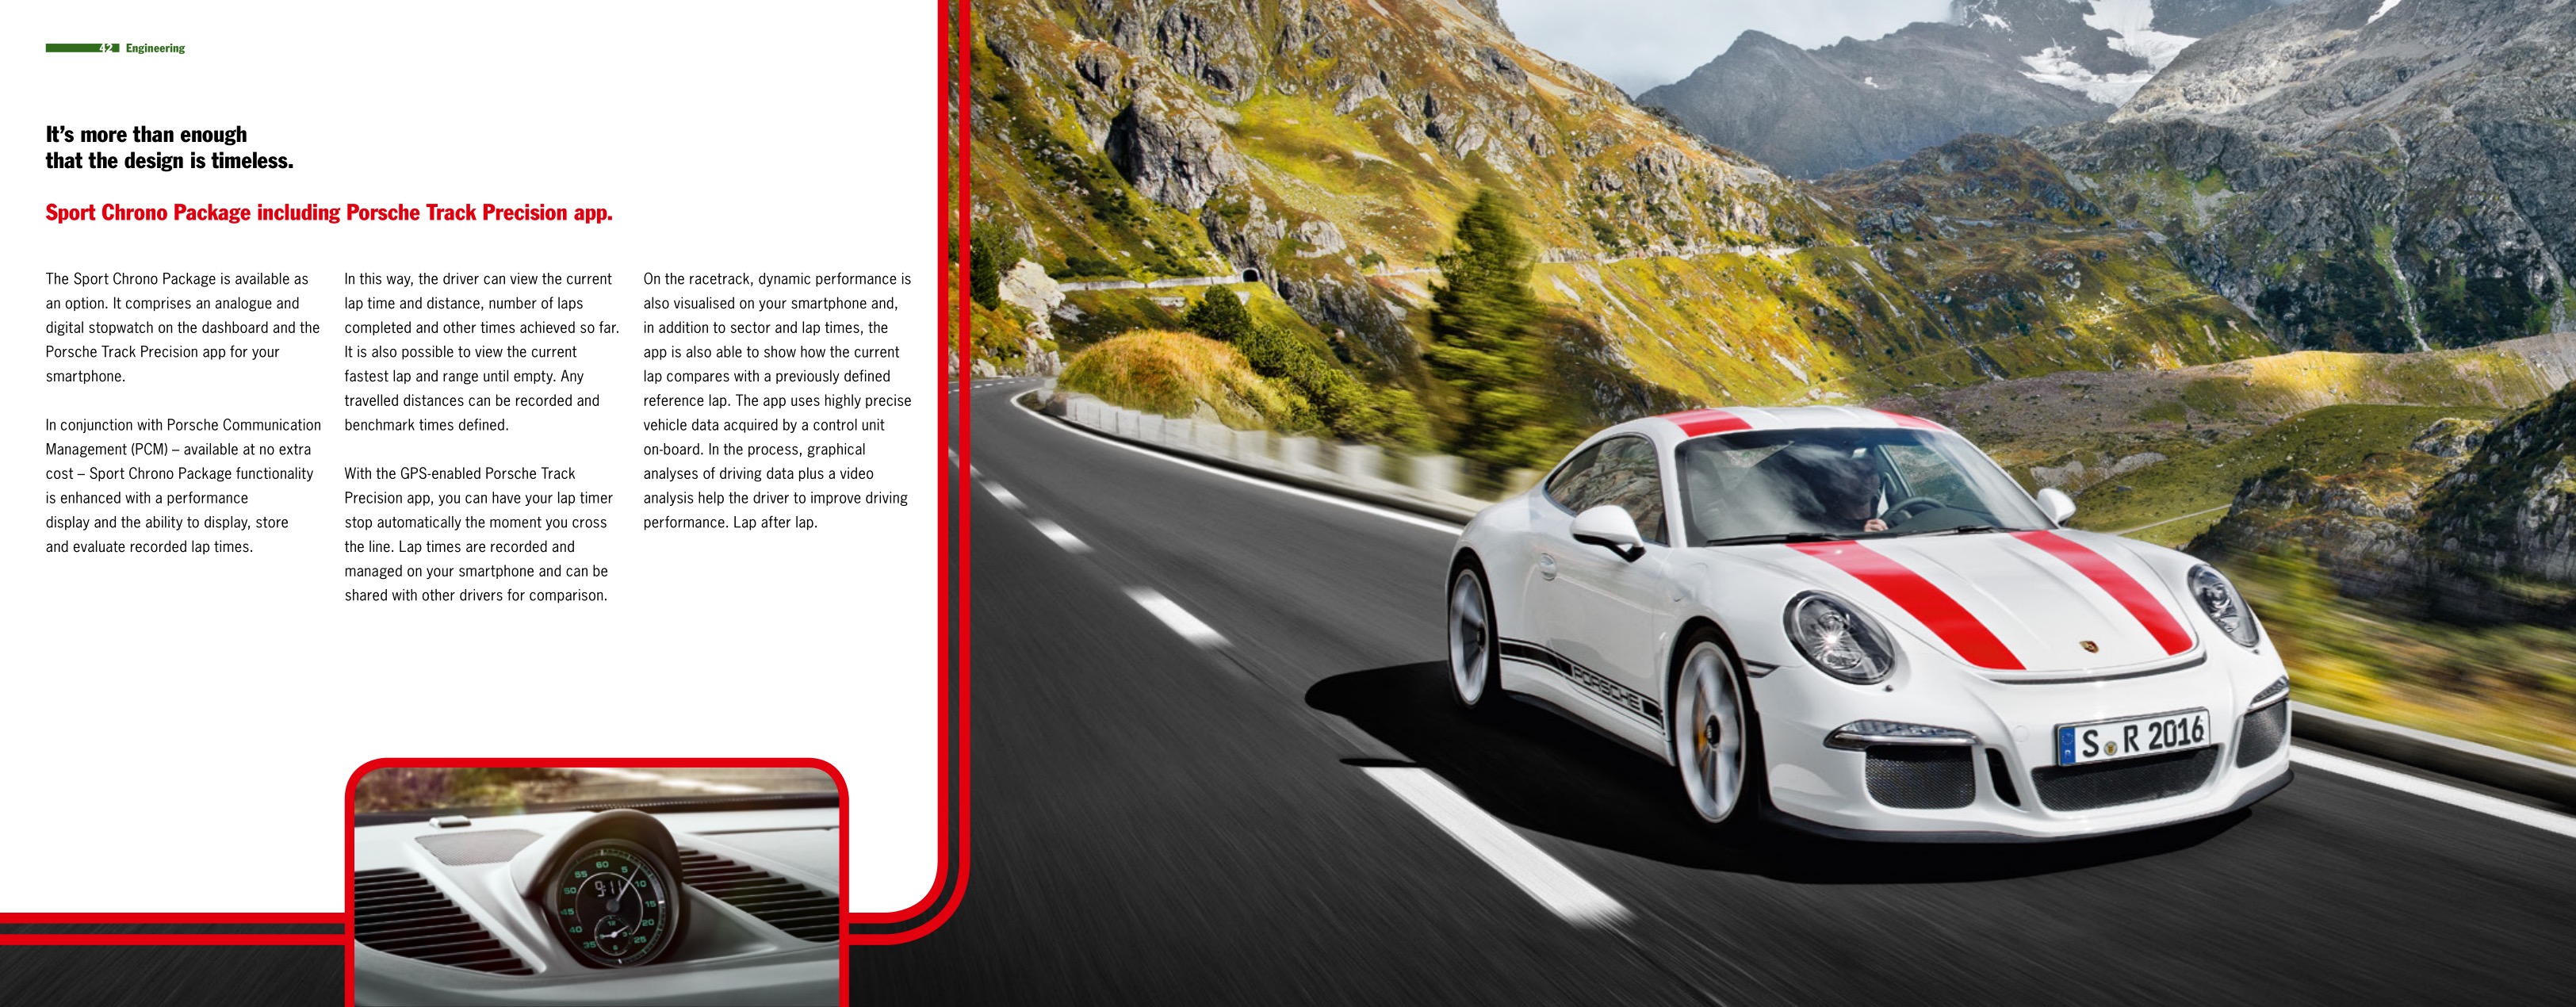 2016 Porsche 911R Brochure Page 15